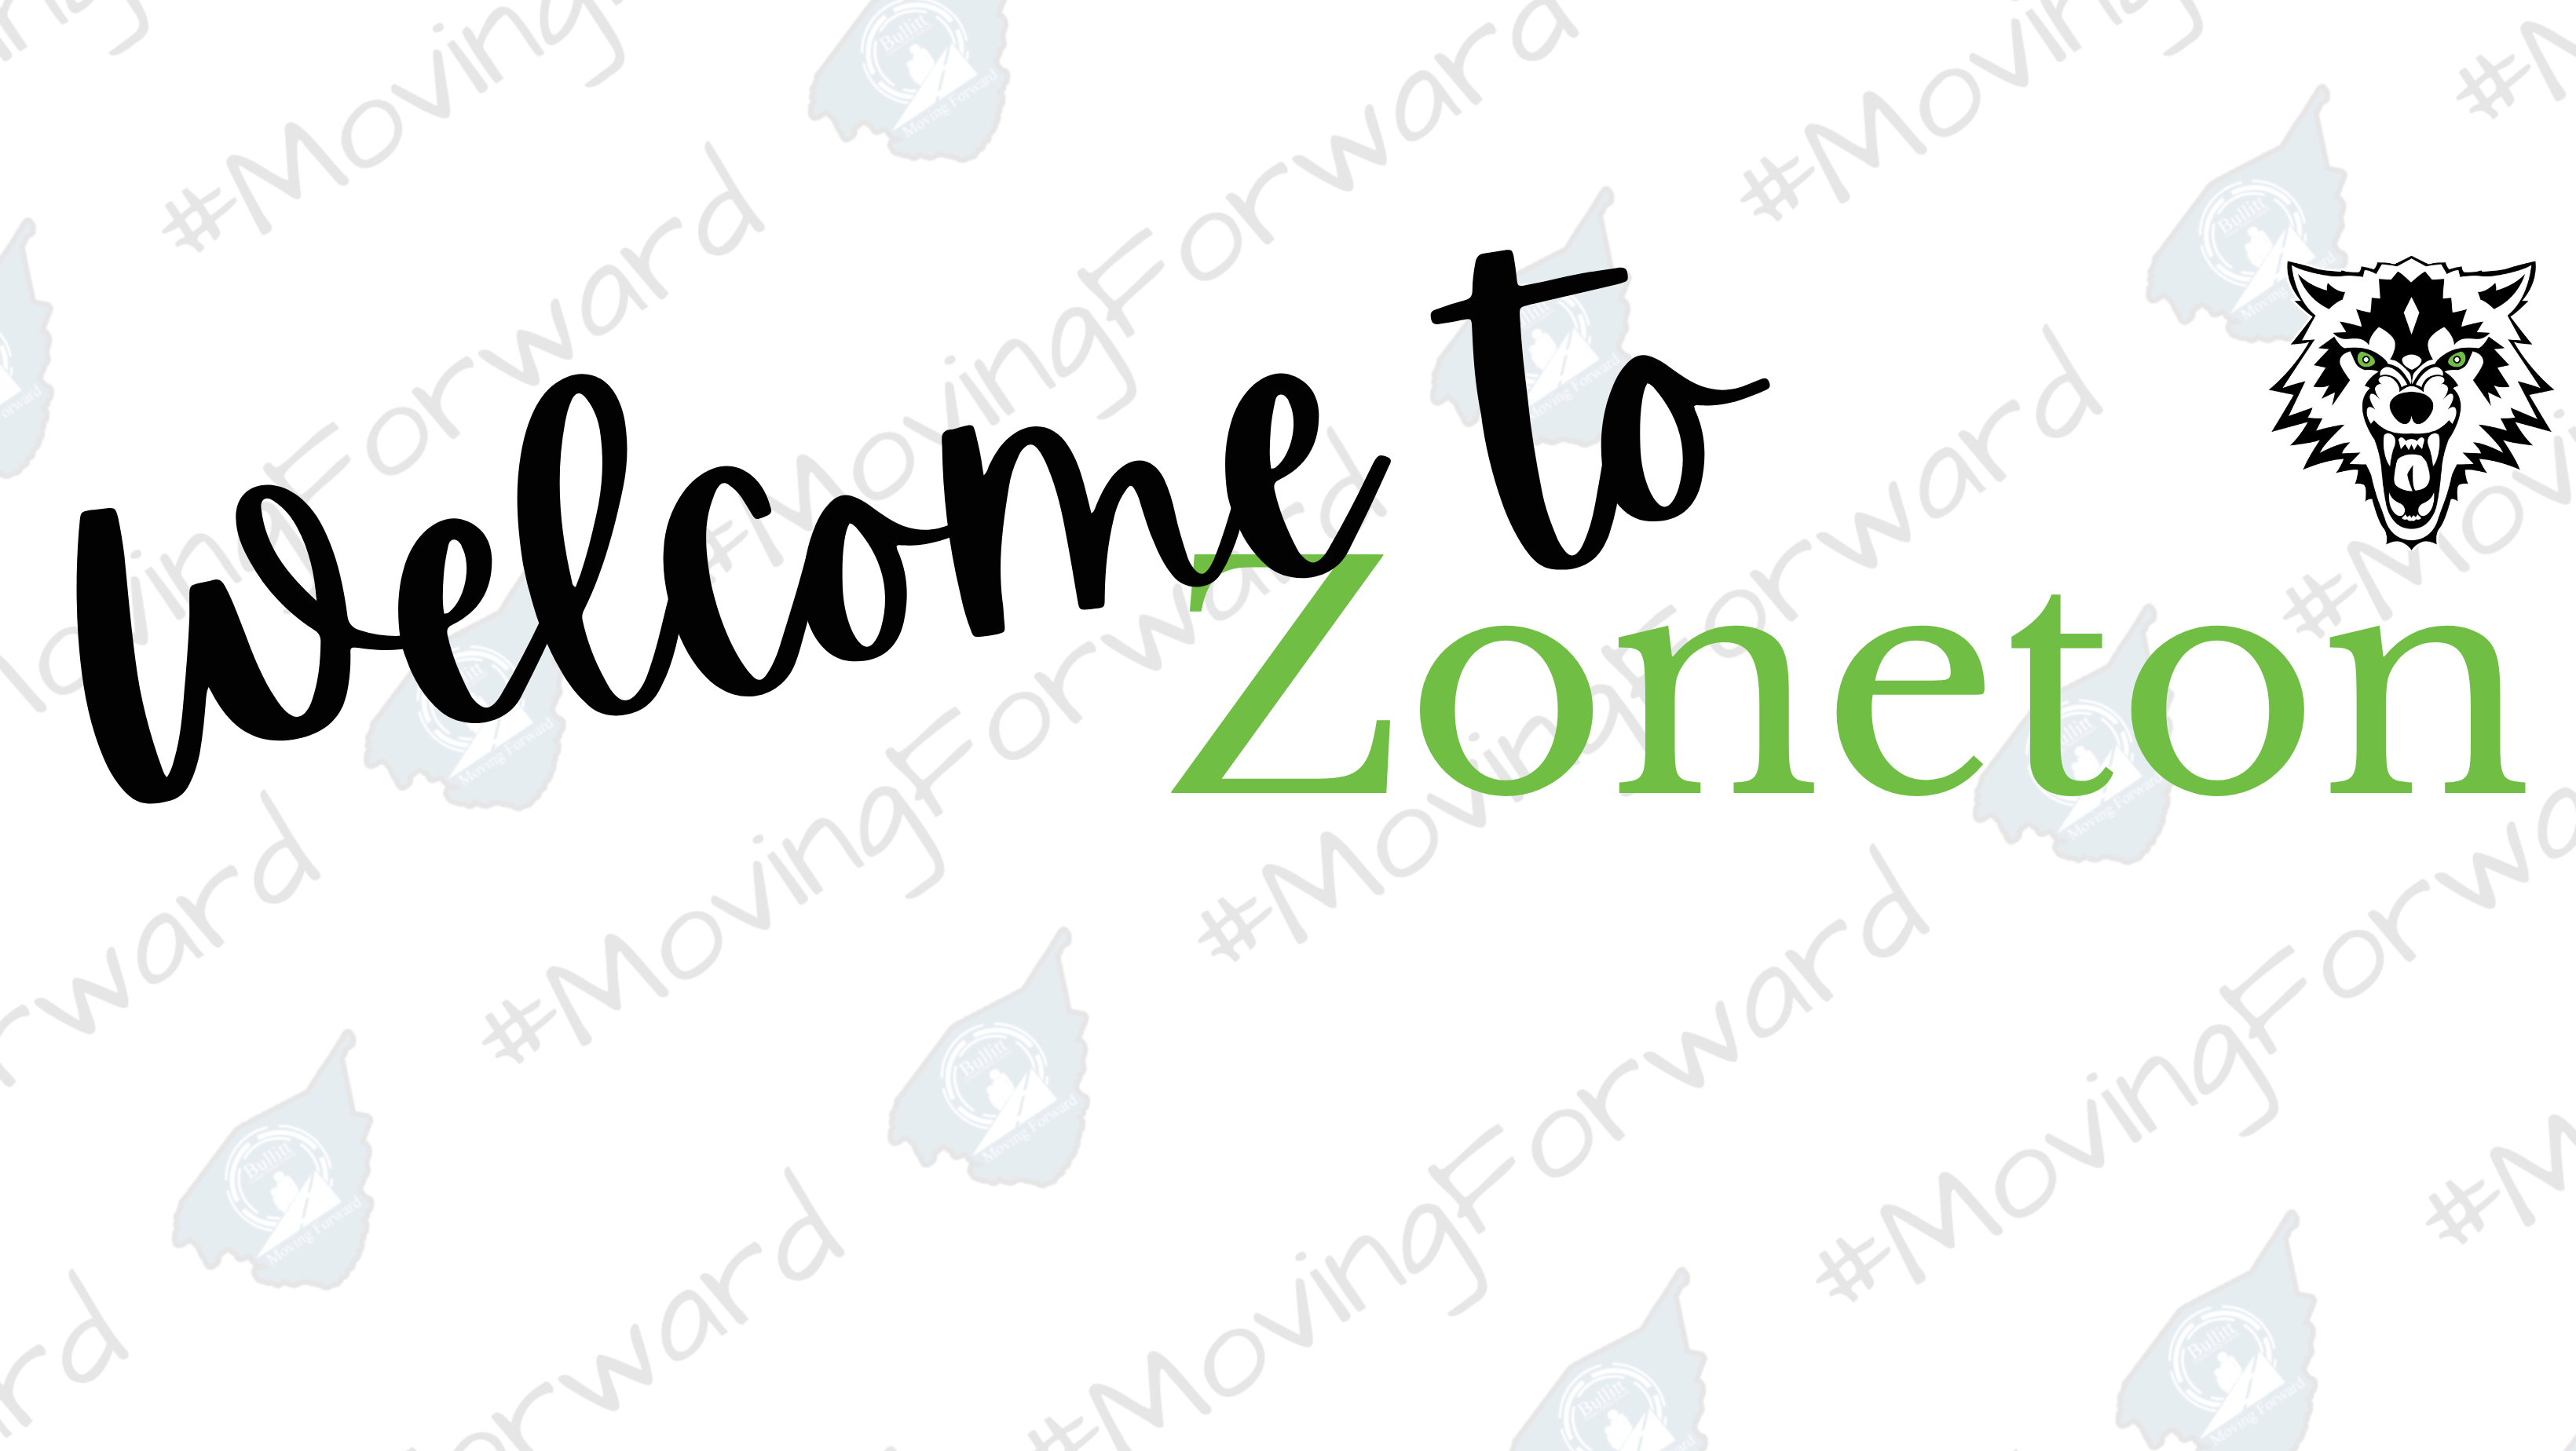 Welcome to Zoneton